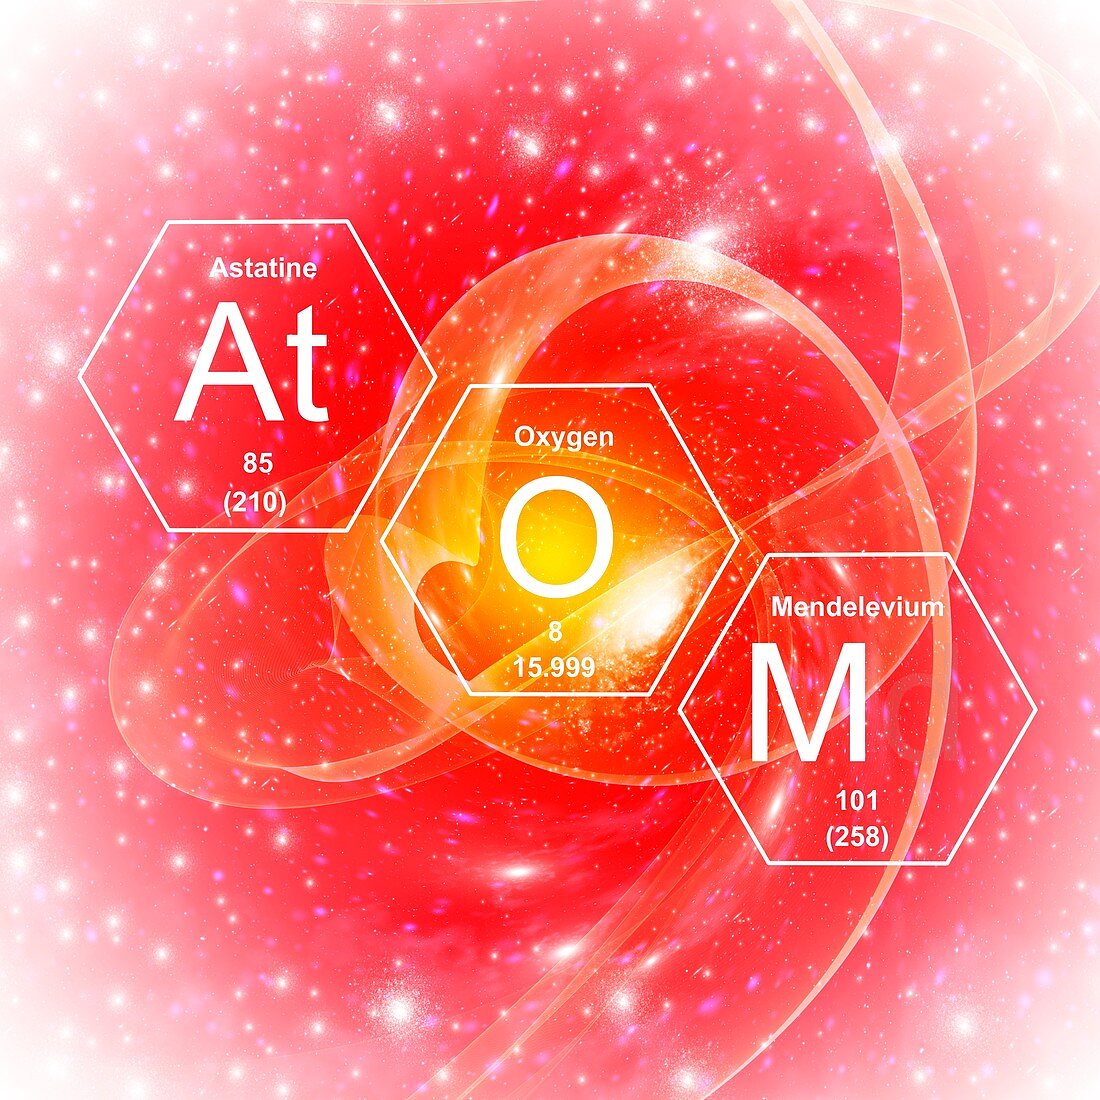 Chemical elements atom, illustration